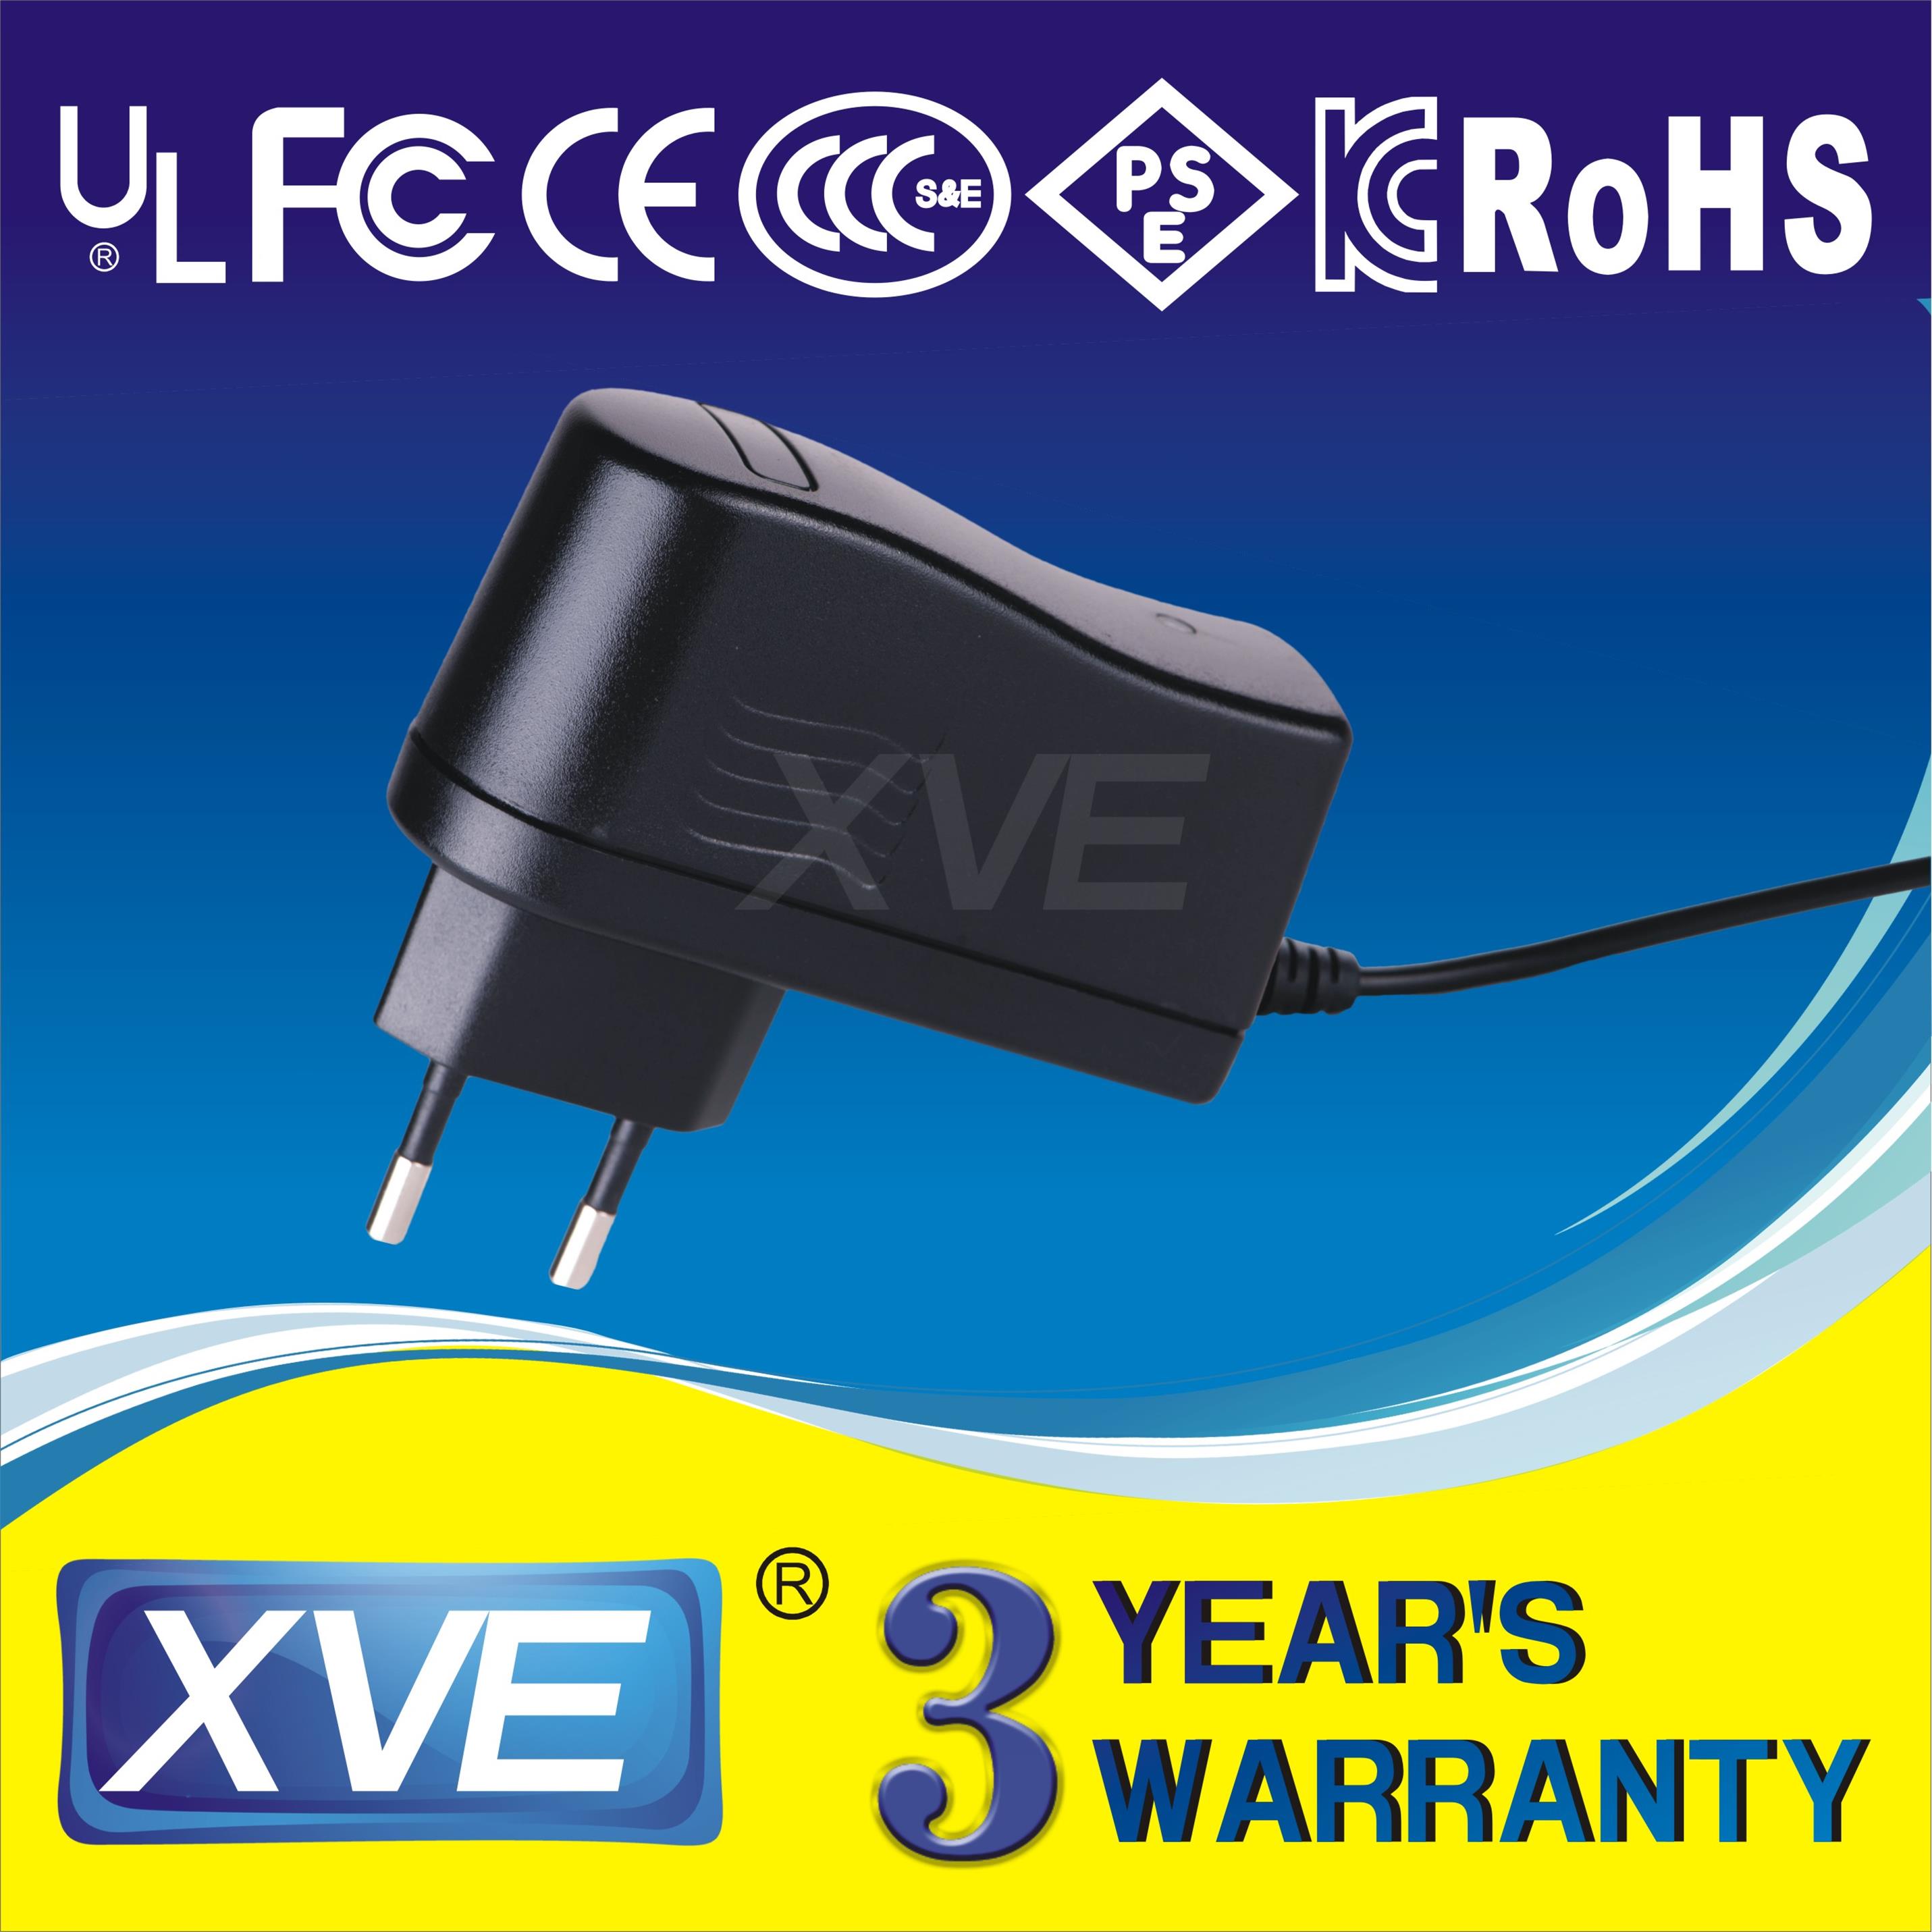 12.6V1A锂电池充电器CE FCC认证12V3节电池组充电器恒流恒压带转灯